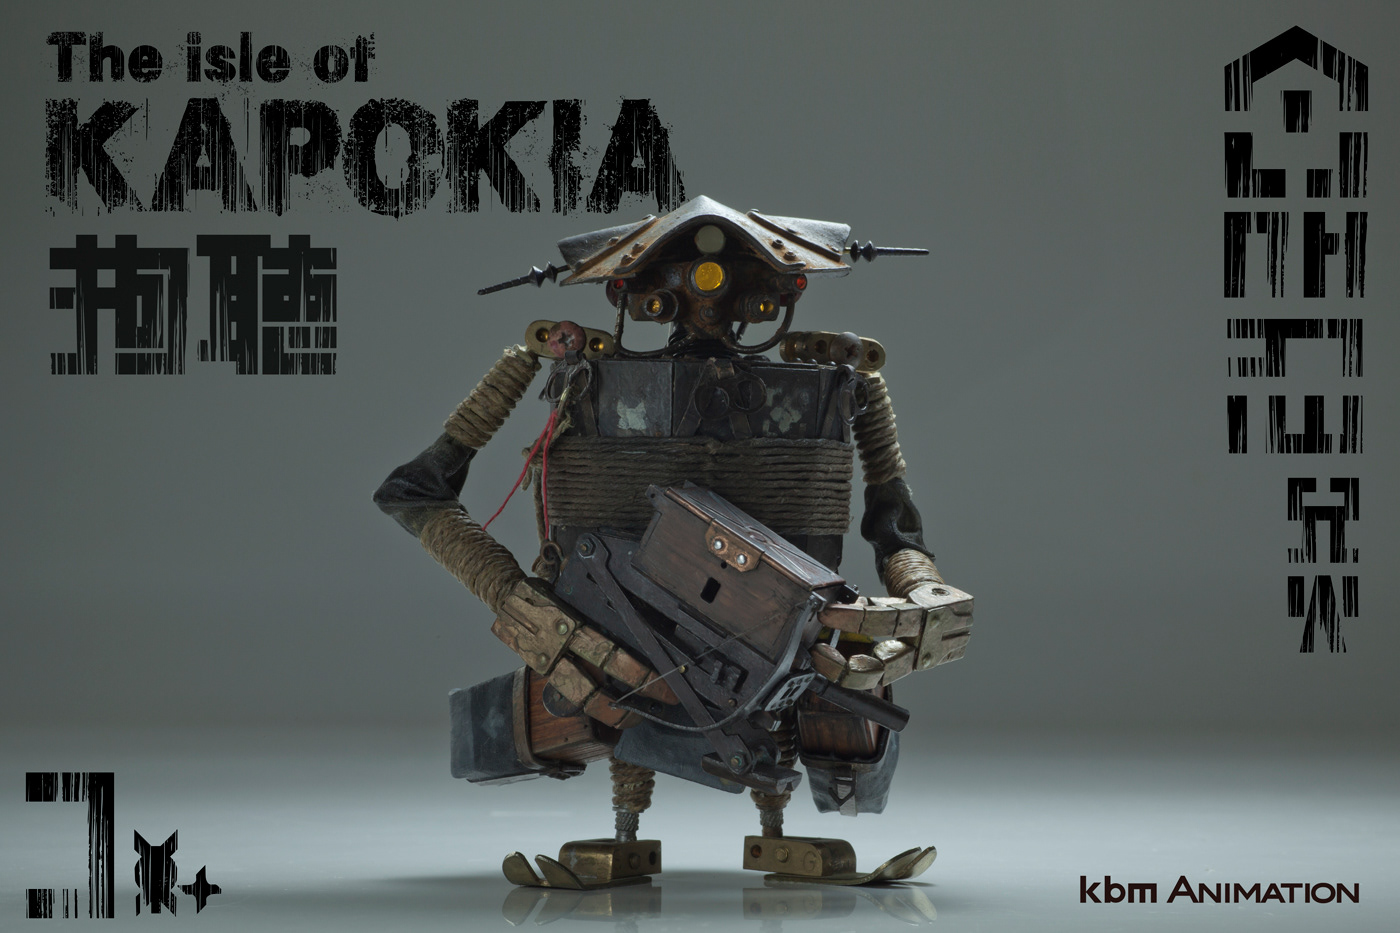 prop robot warrior puppet armature samurai stop motion pathfinder Miniature ninja